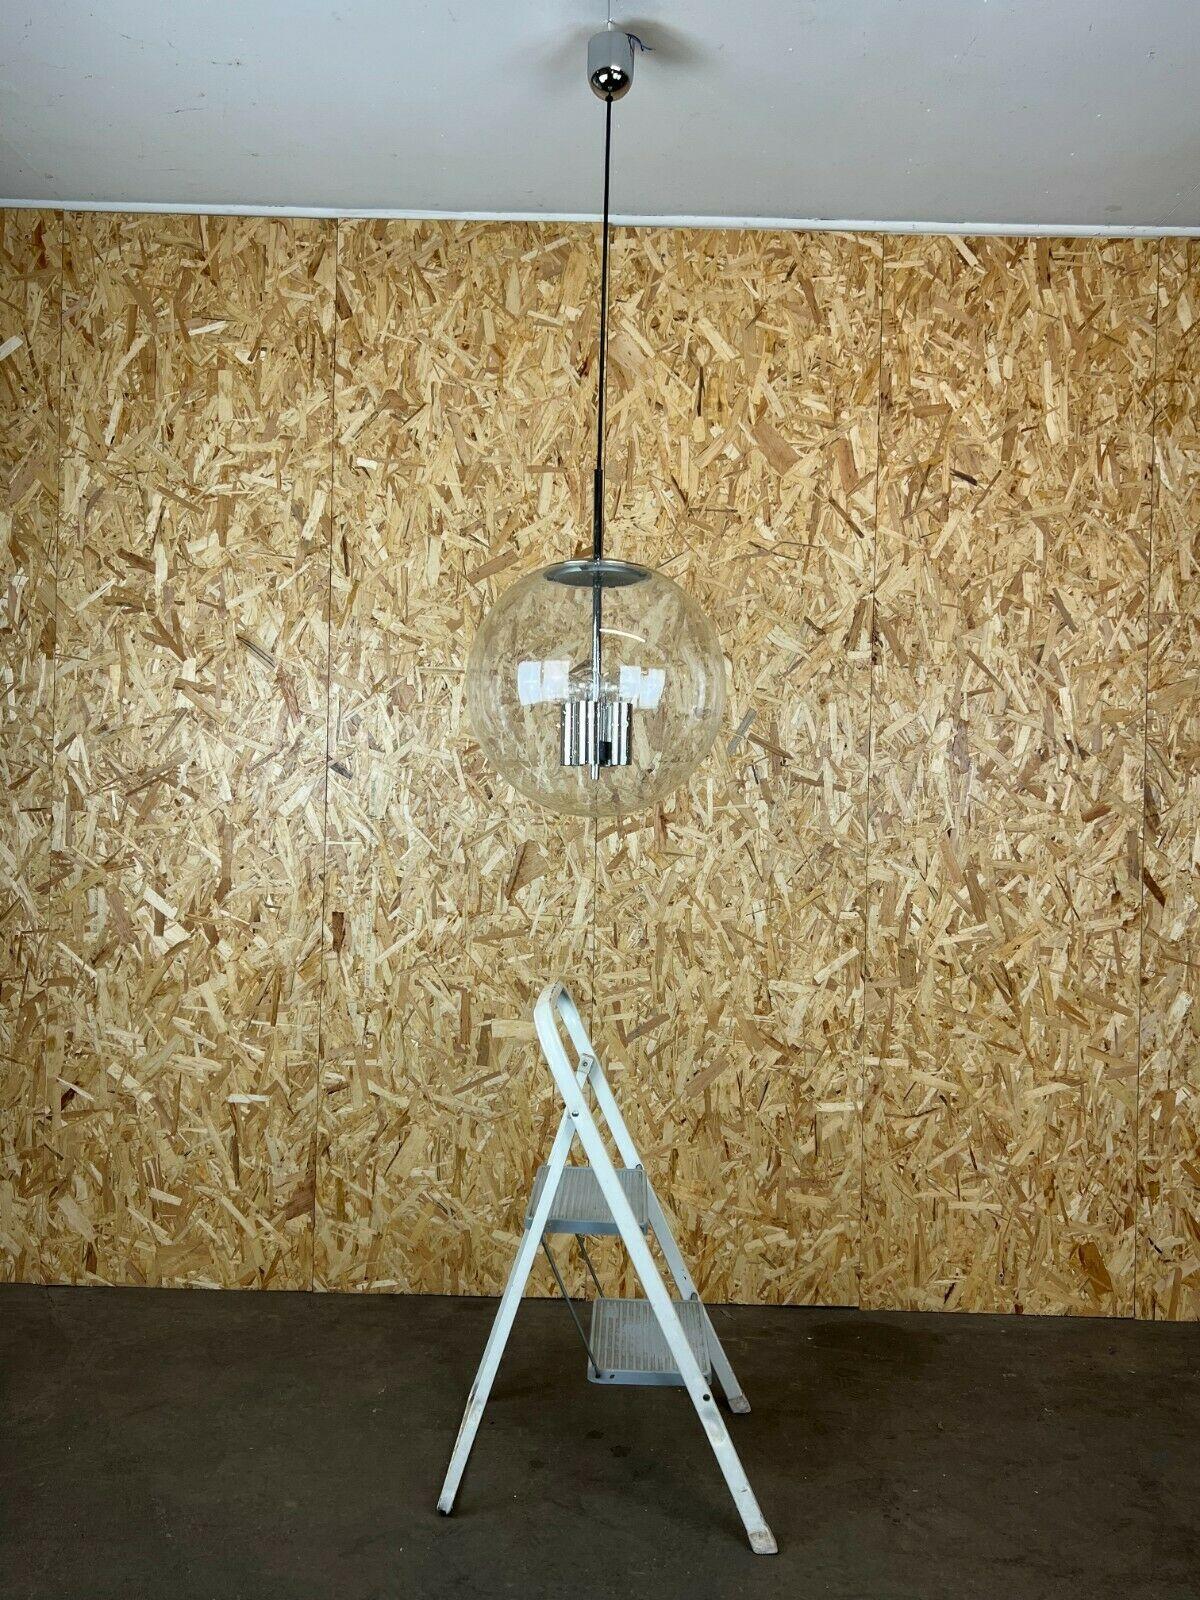 XXL 60s 70s lamp light ceiling lamp Limburg spherical lamp Ball Design 60s

Object: ceiling lamp

Manufacturer: Glashütte Limburg

Condition: good

Age: around 1960-1970

Dimensions:

Diameter = 45cm
Hanging height = 135cm

Other